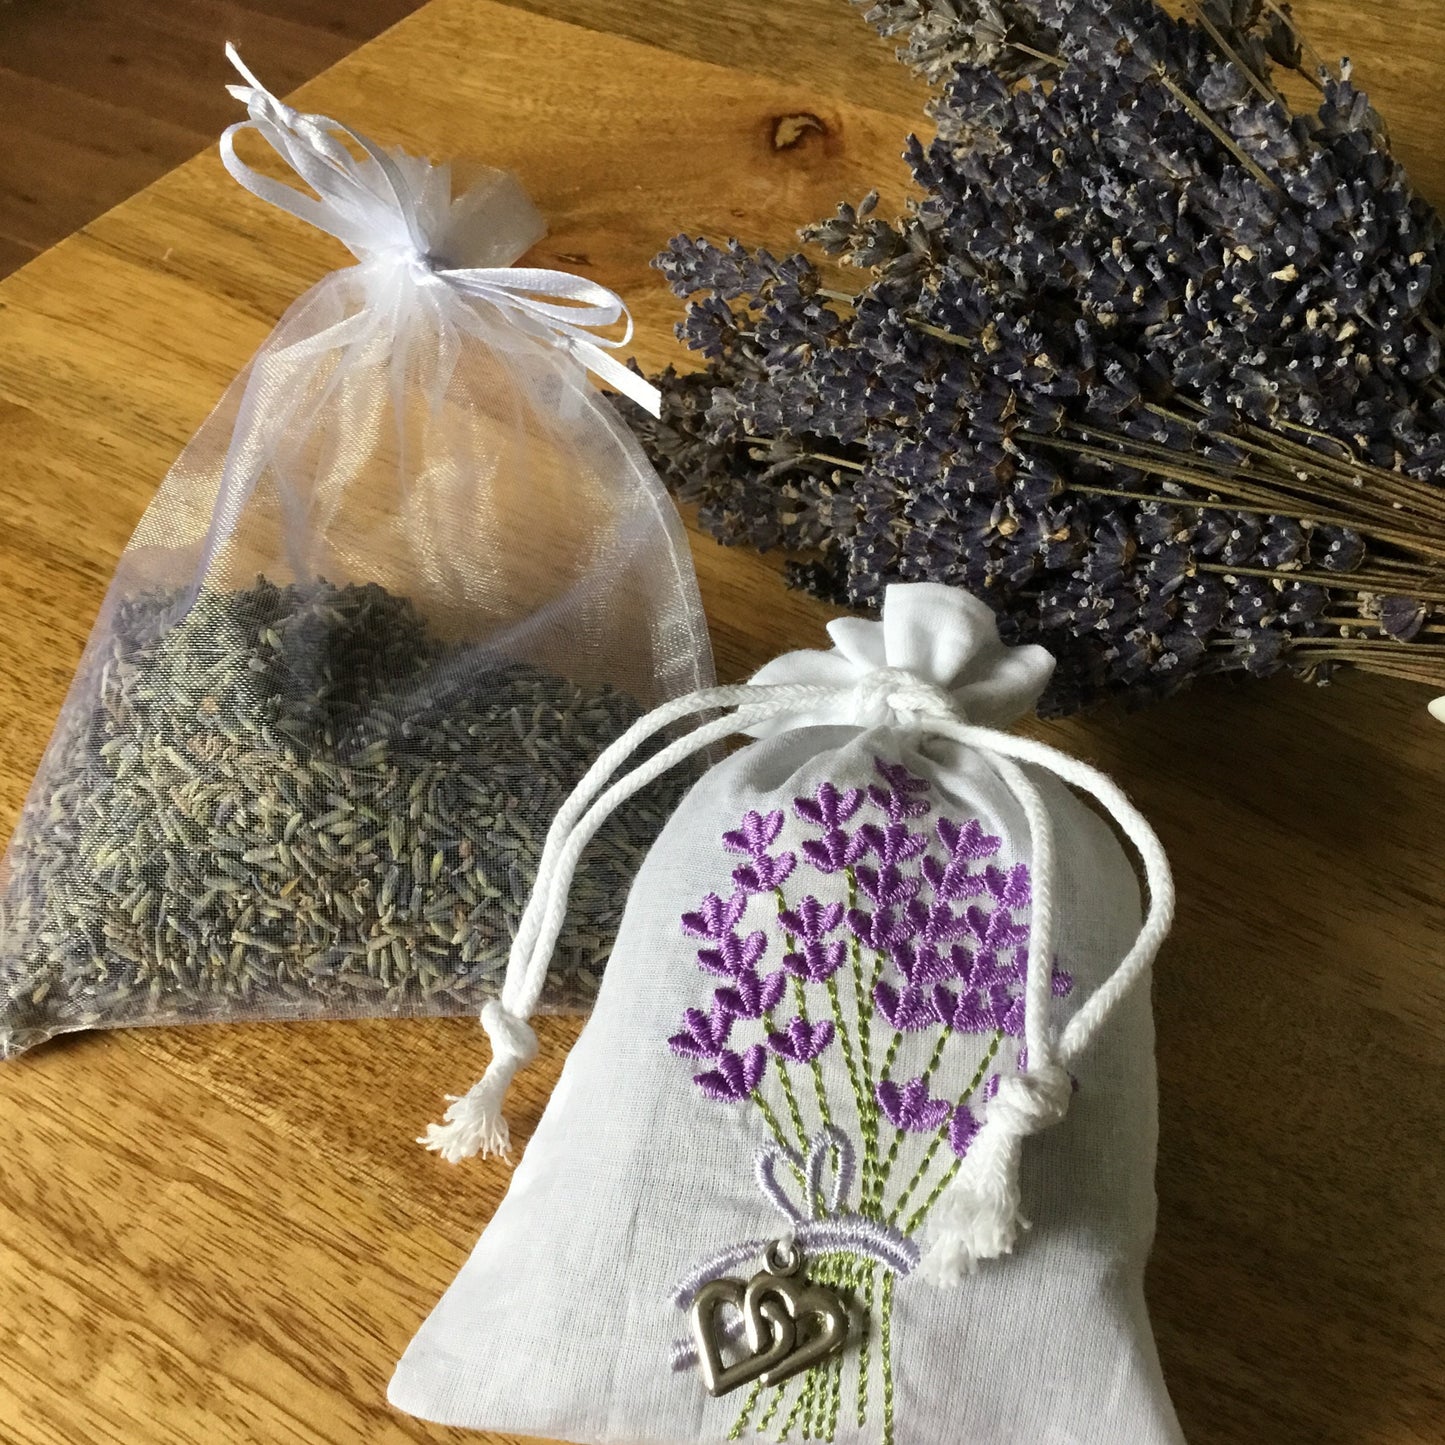 Embroidered Lavender bag plus dried lavender for inside the bag. 